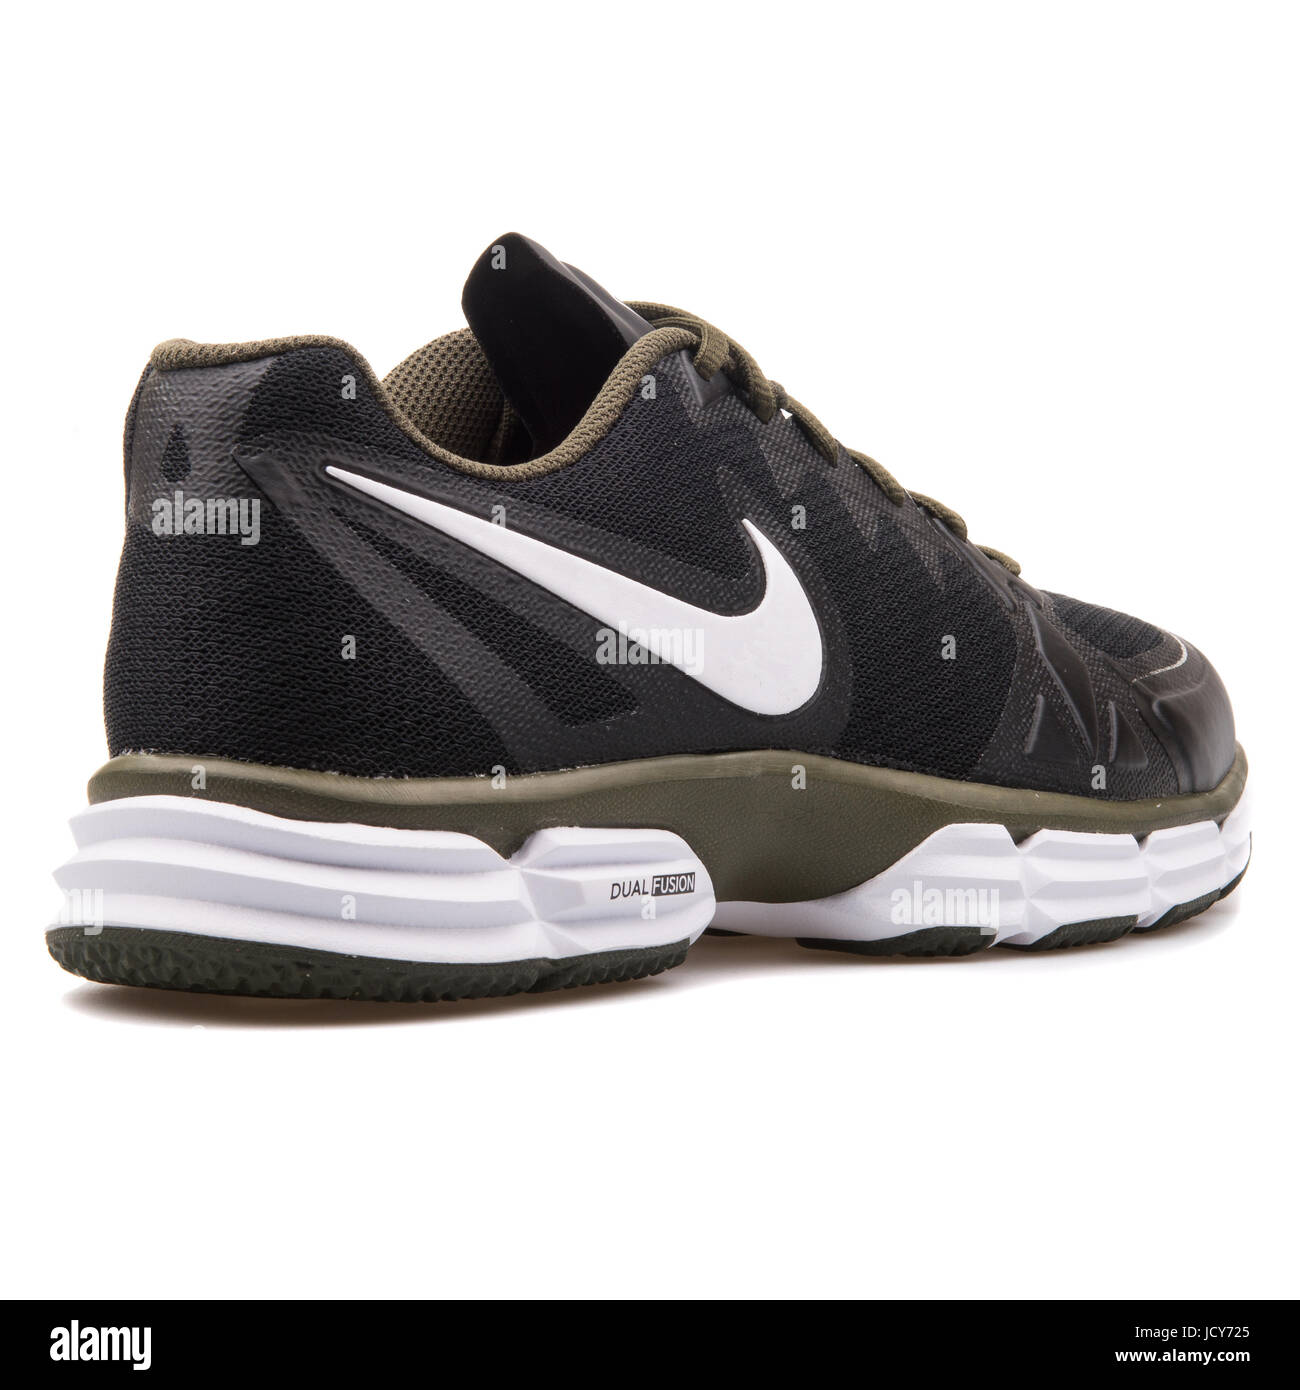 Nike Dual Fusion TR 6 Black and Khaki Men's Running Shoes - 704889-013  Stock Photo - Alamy